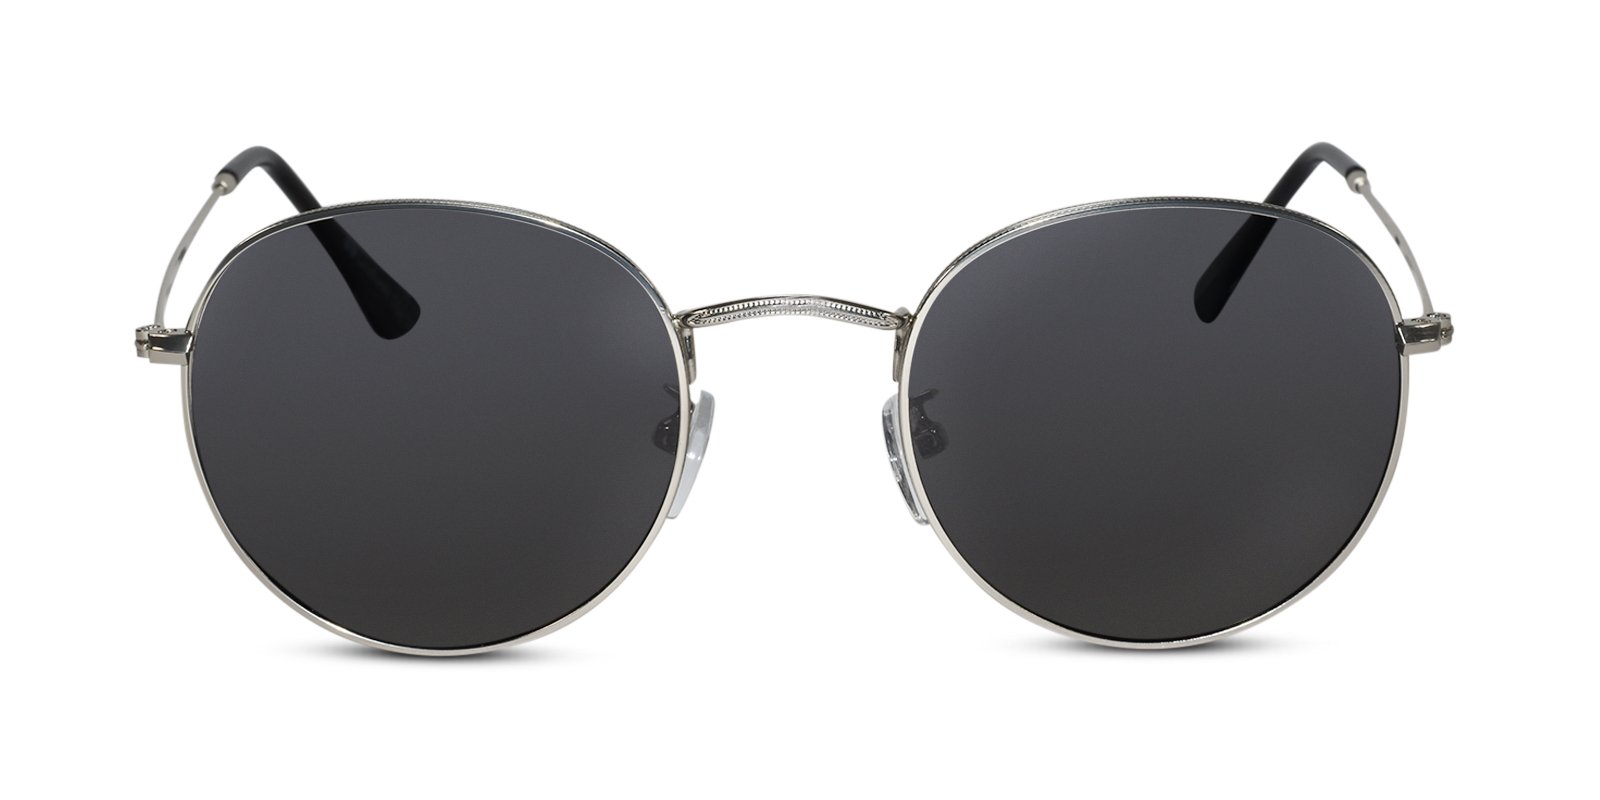 Vintage silver round sunglasses